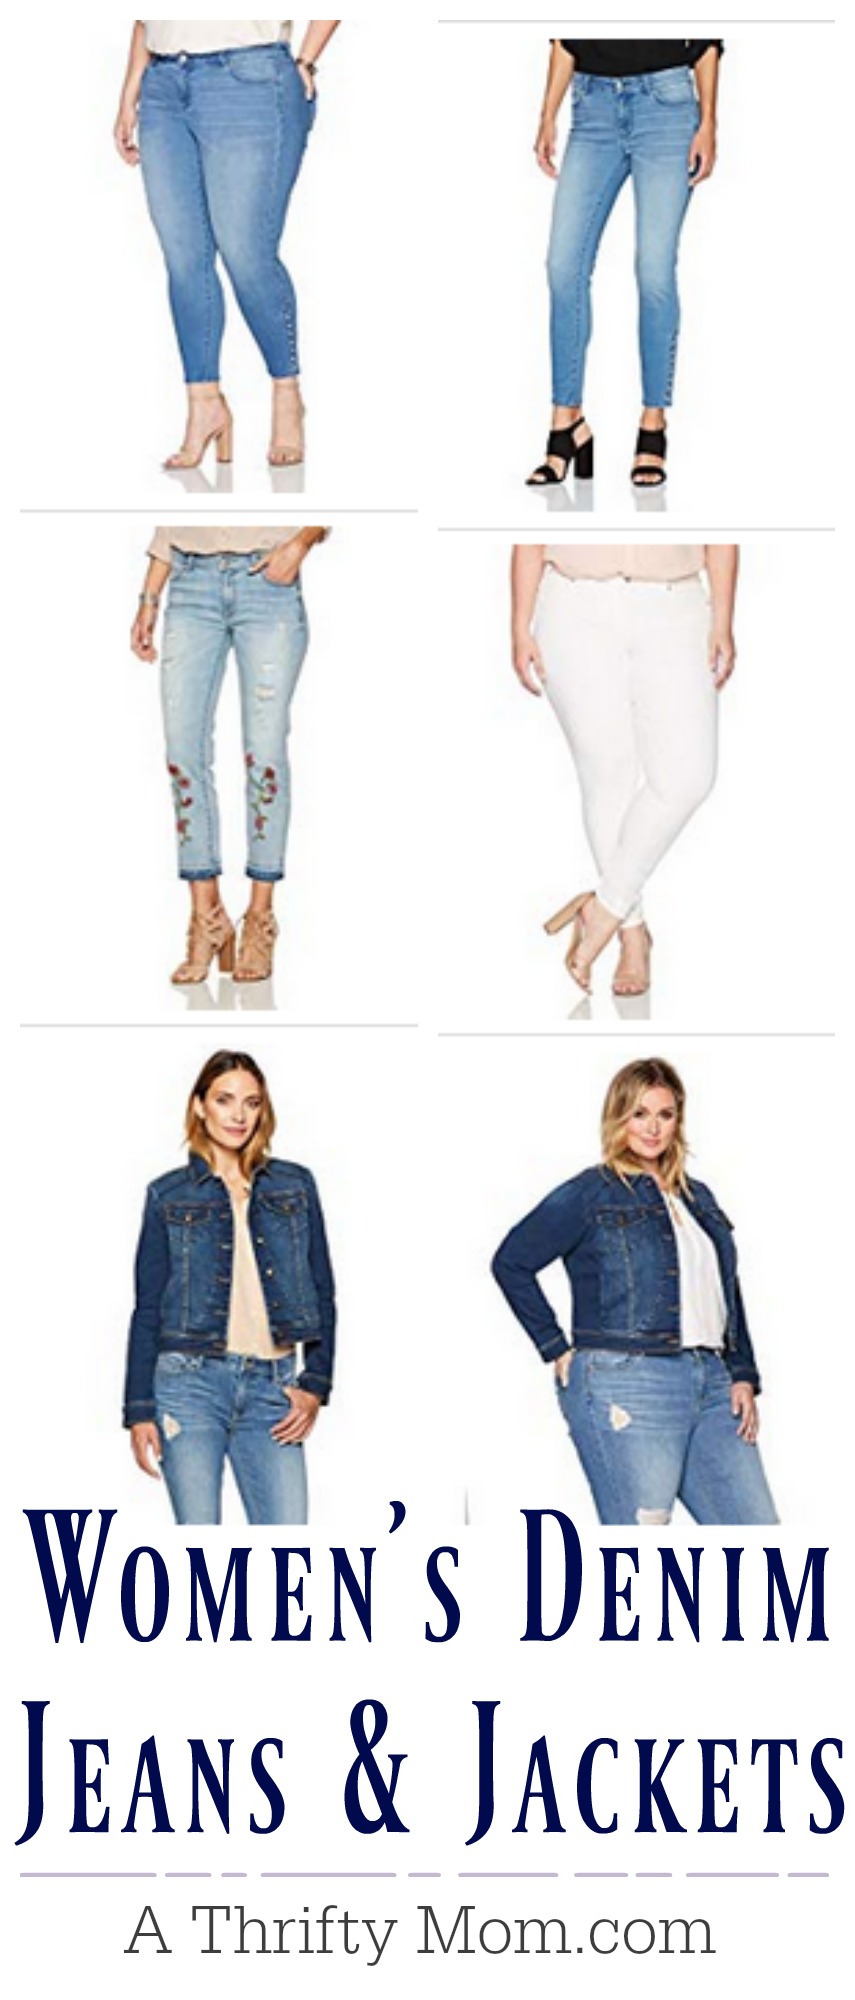 Women's Denim Jeans & Jackets - A Thrifty Mom